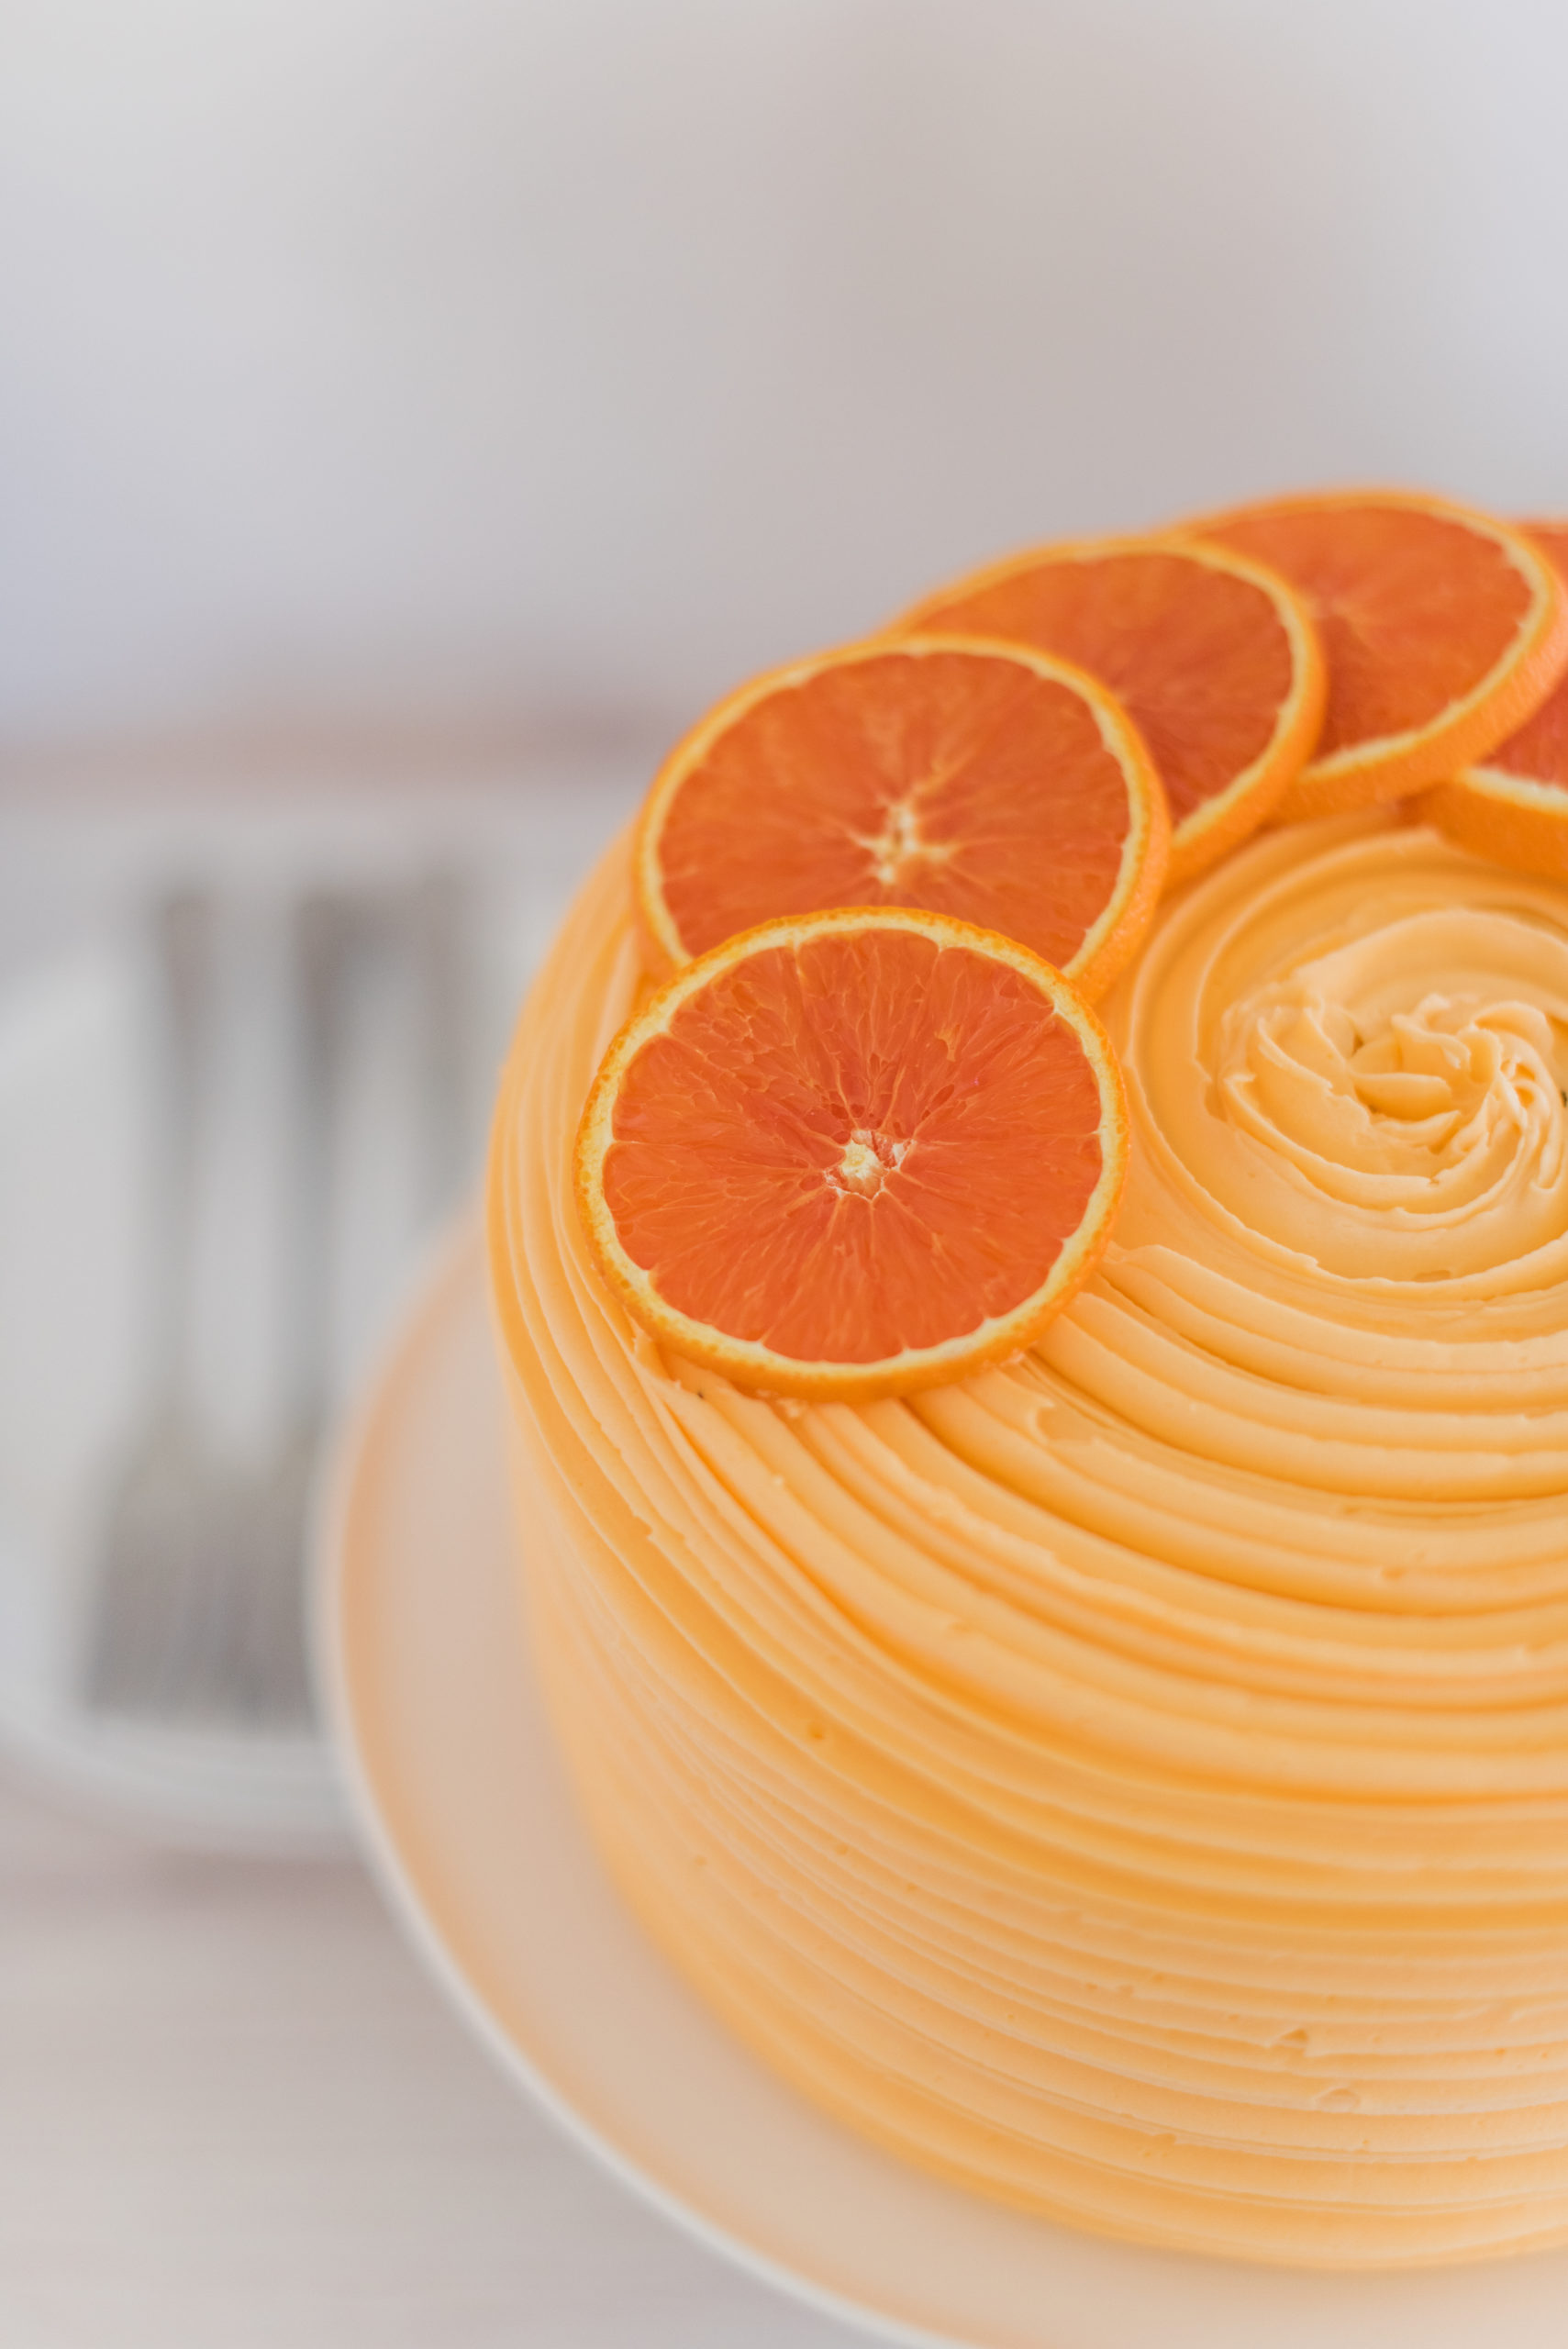 Orange Almond Poppy Seed Cake - light and fluffy poppy seed cake layers, infused with orange and almond flavoring, topped with almond buttercream and orange curd. #cakebycourtney #almondcake #almondpoppyseedcake #orangealmondpoppyseedcake #orangecurd #almondbuttercream #summercake #summerdessertrecipe #summerdessert #poppyseedcake #lightandfluffycake #cakedesign #cakerecipes #cakesforgirlsbirthday #cakeaesthetic #cakeideas #cakedecorating